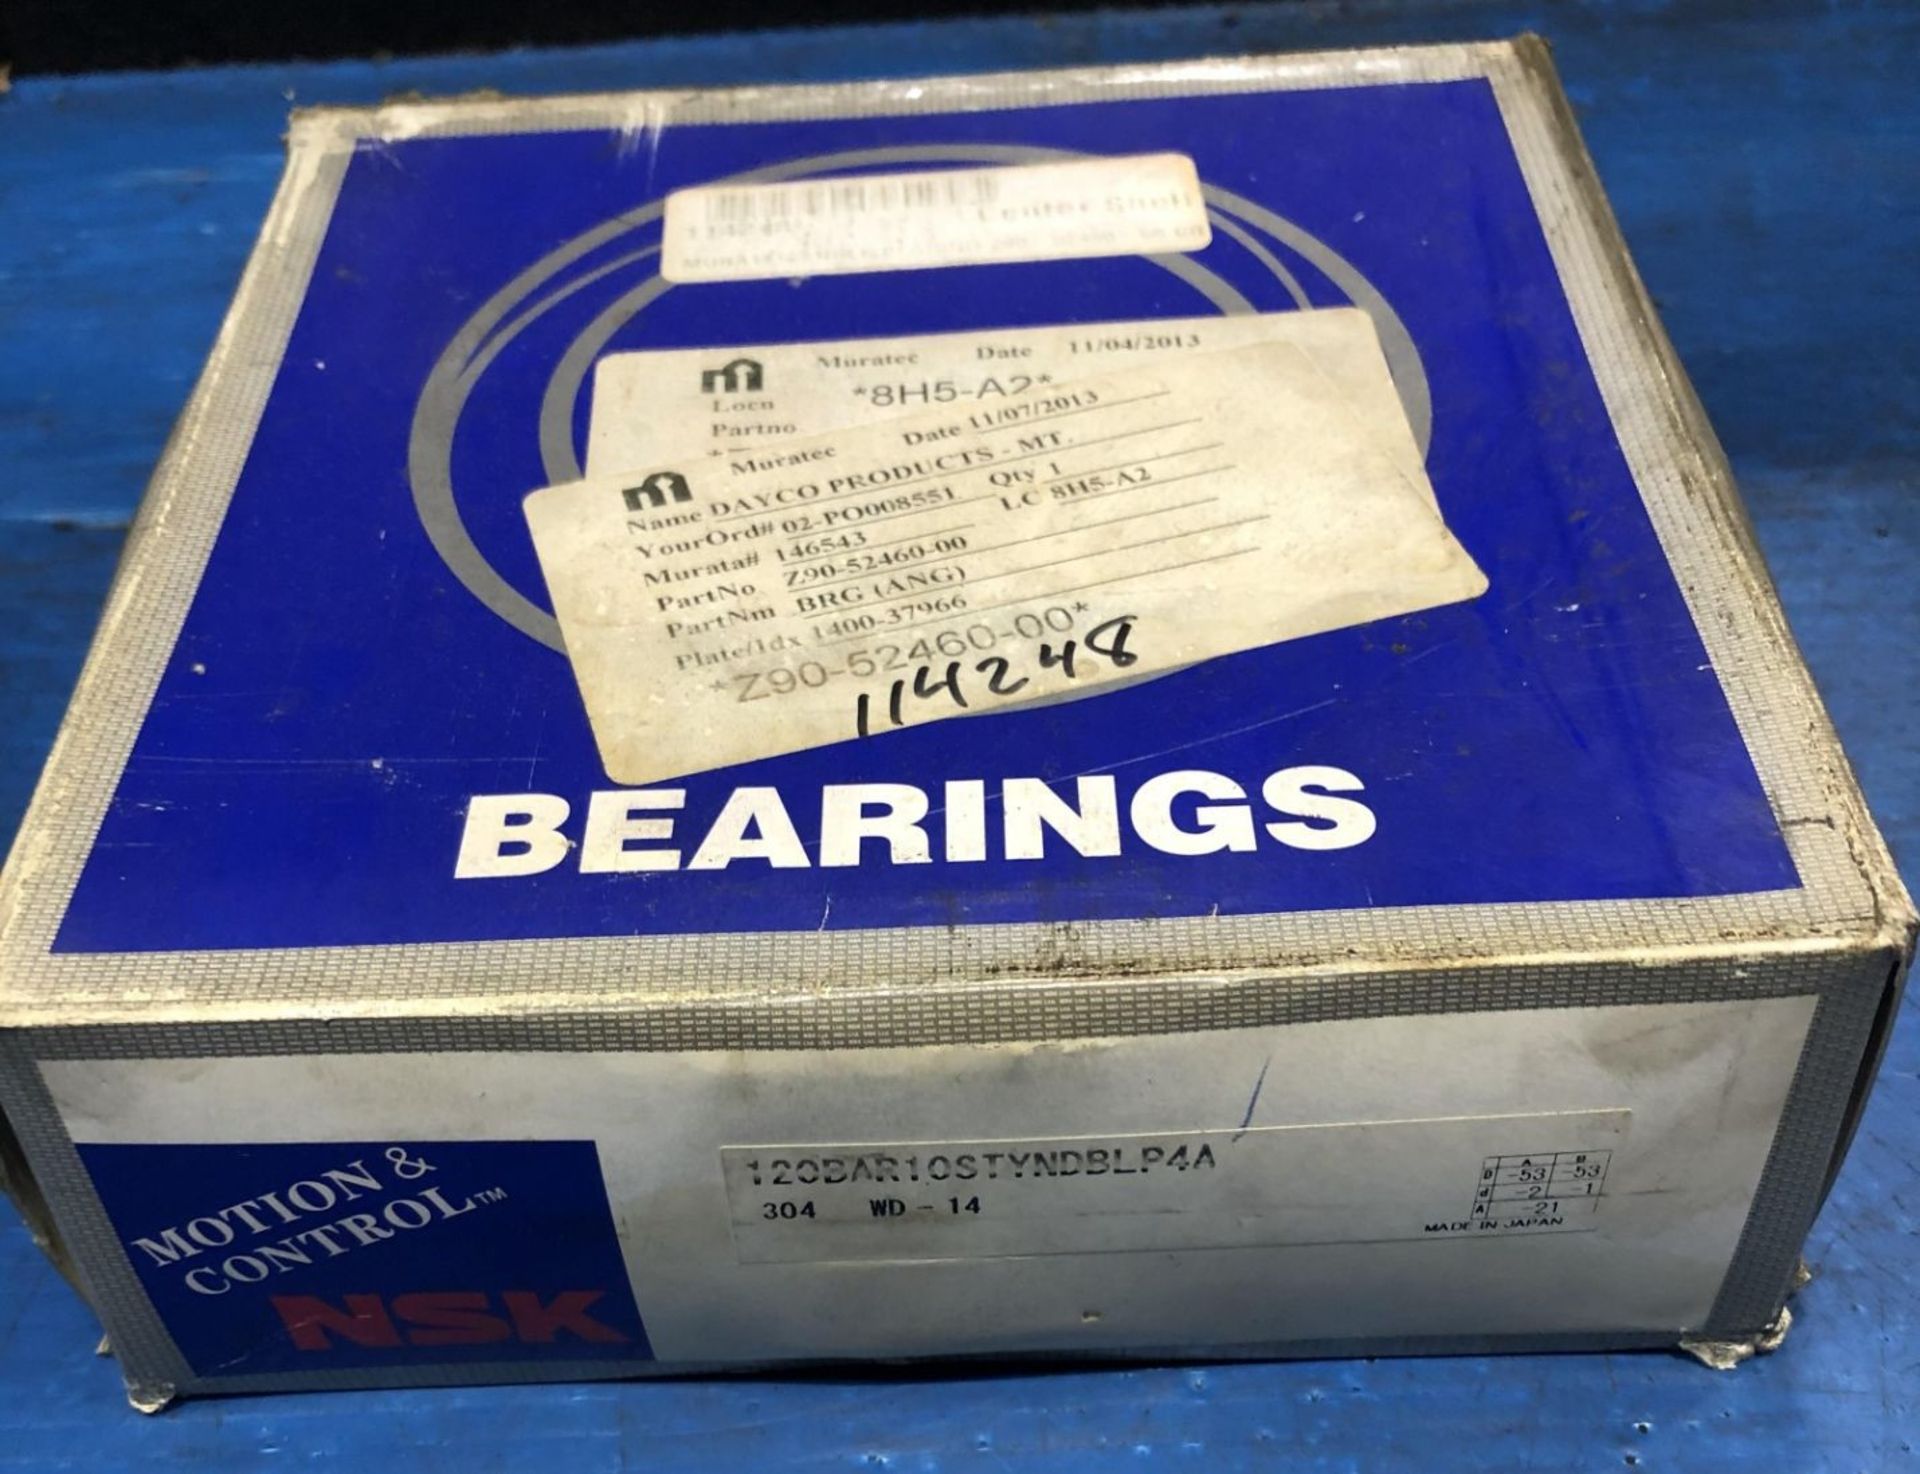 NEW IN BOX NSK Bearings, 120BAR10STYNDBLP4A